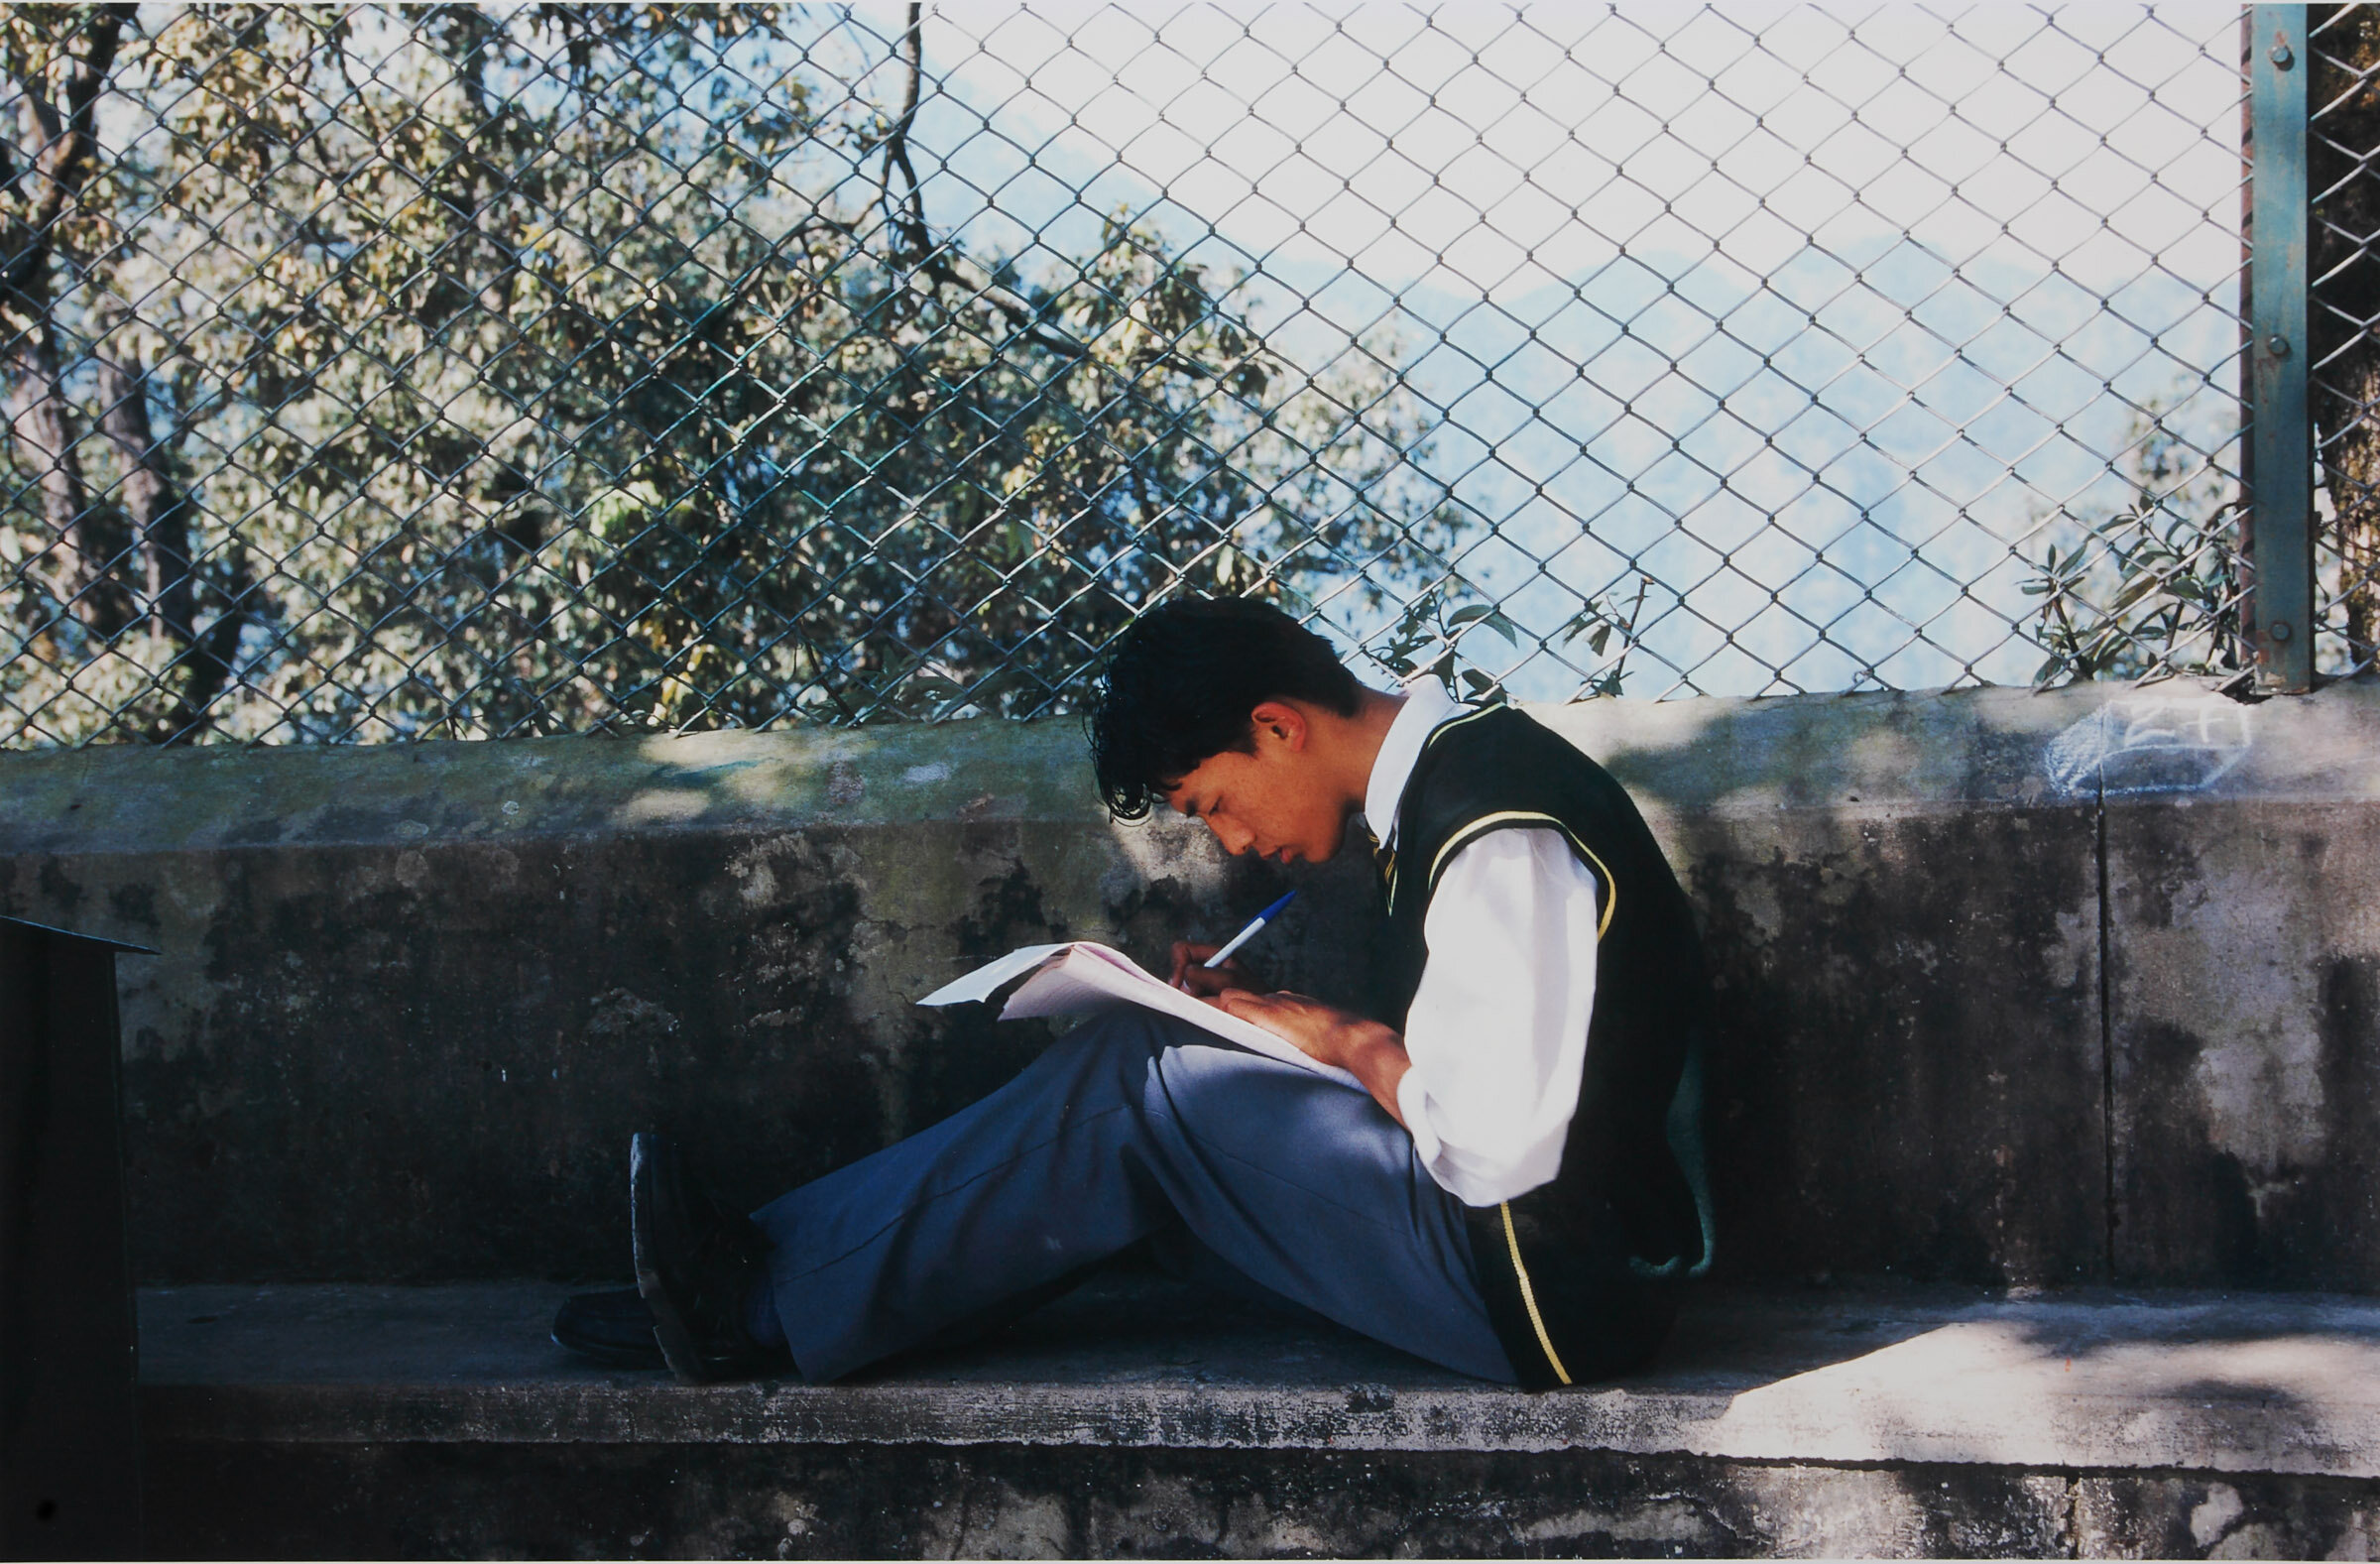   Barbara Goodbody, Boy in school courtyard taking exam, 1999, C print, 13 x 19”  